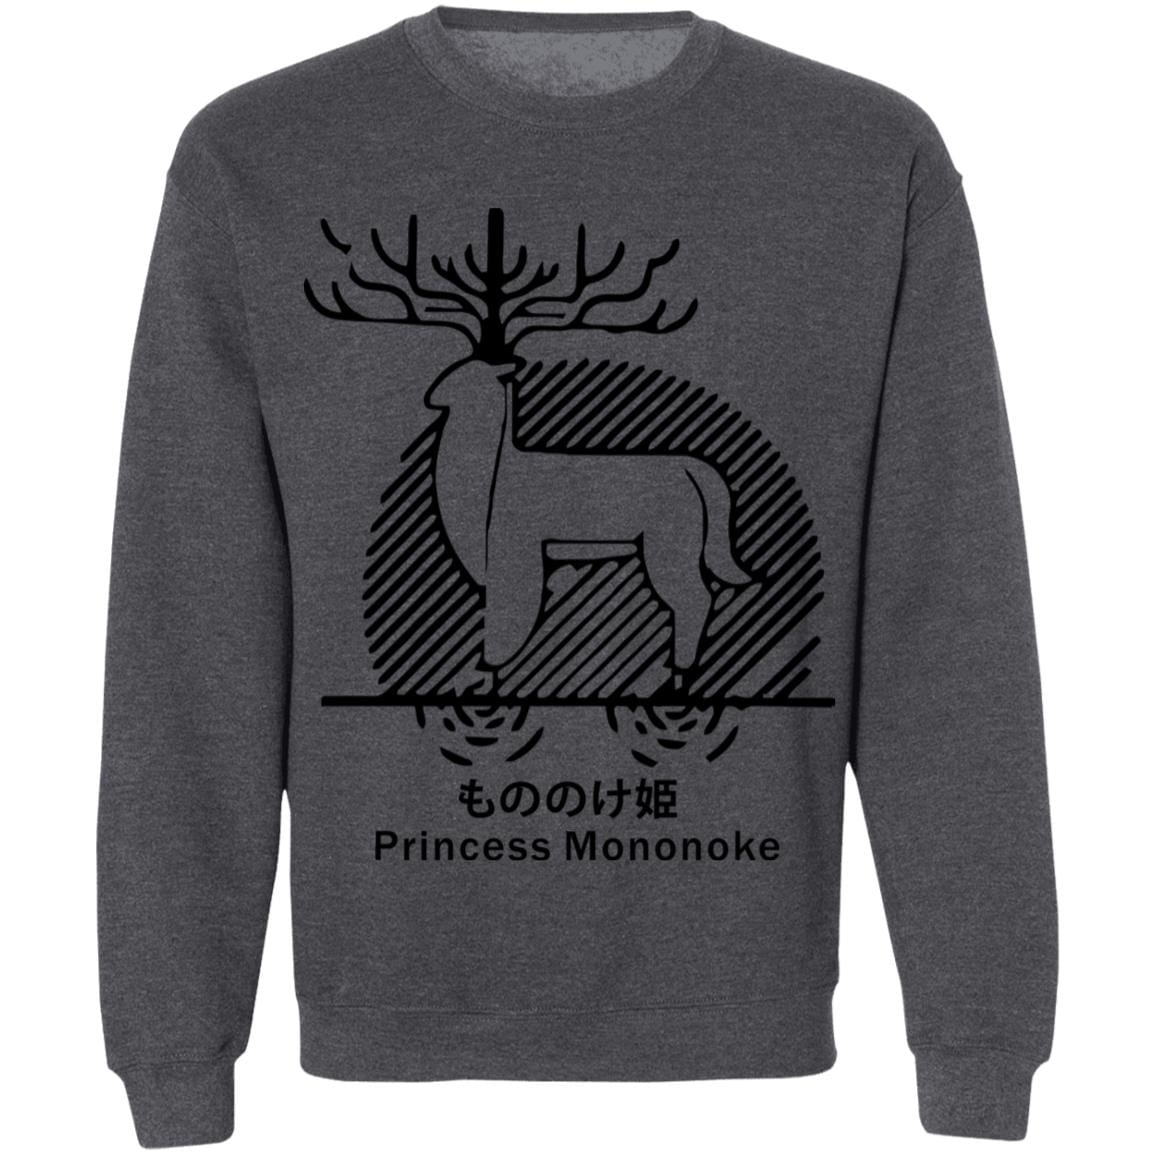 Princess Mononoke – Shishigami Line Art Sweatshirt Unisex